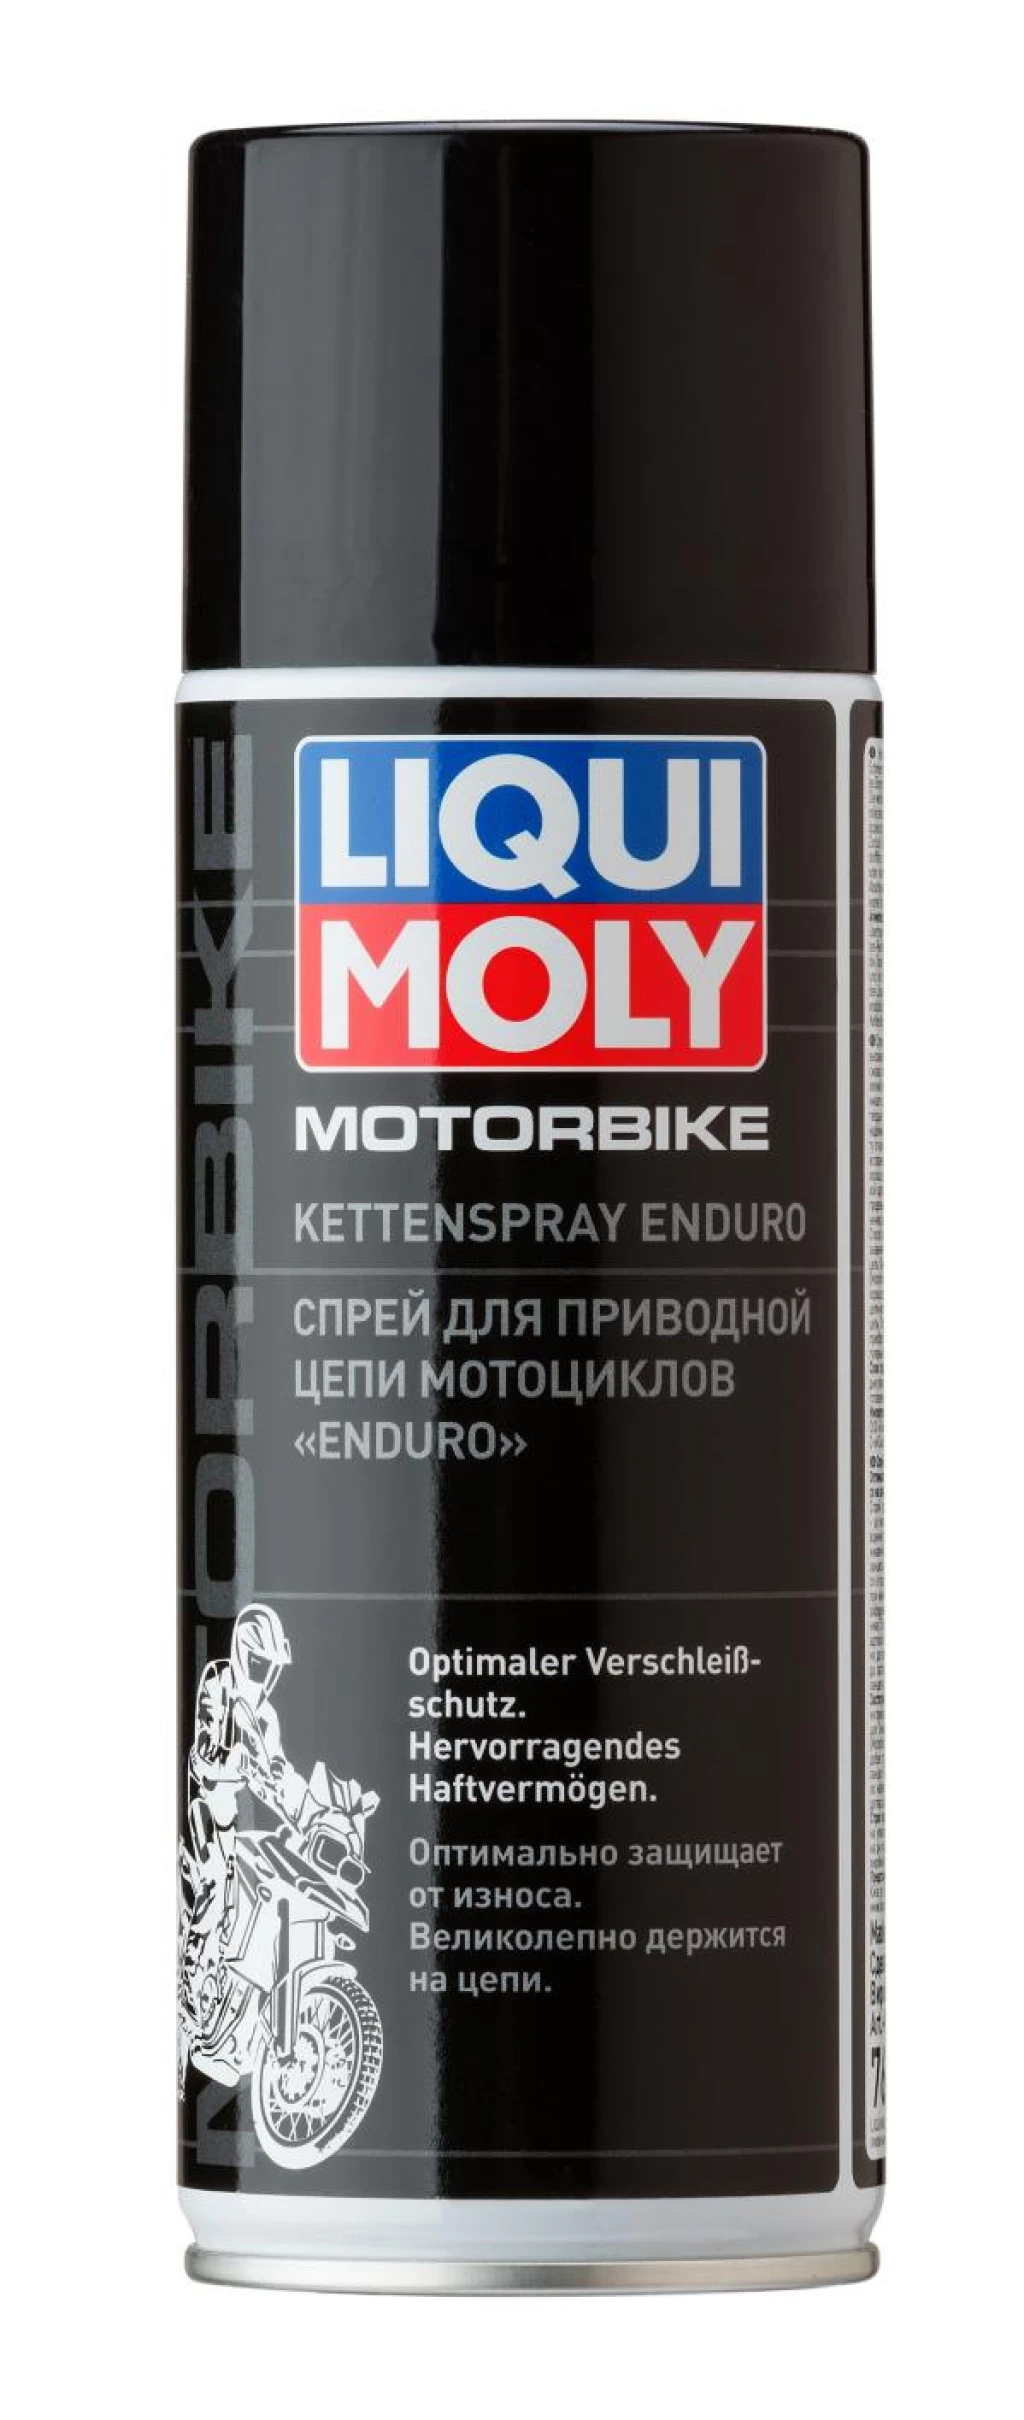 Спрей для приводной цепи мотоц. Liqui Moly Motorrad Kettenspray Enduro спрей 400 мл